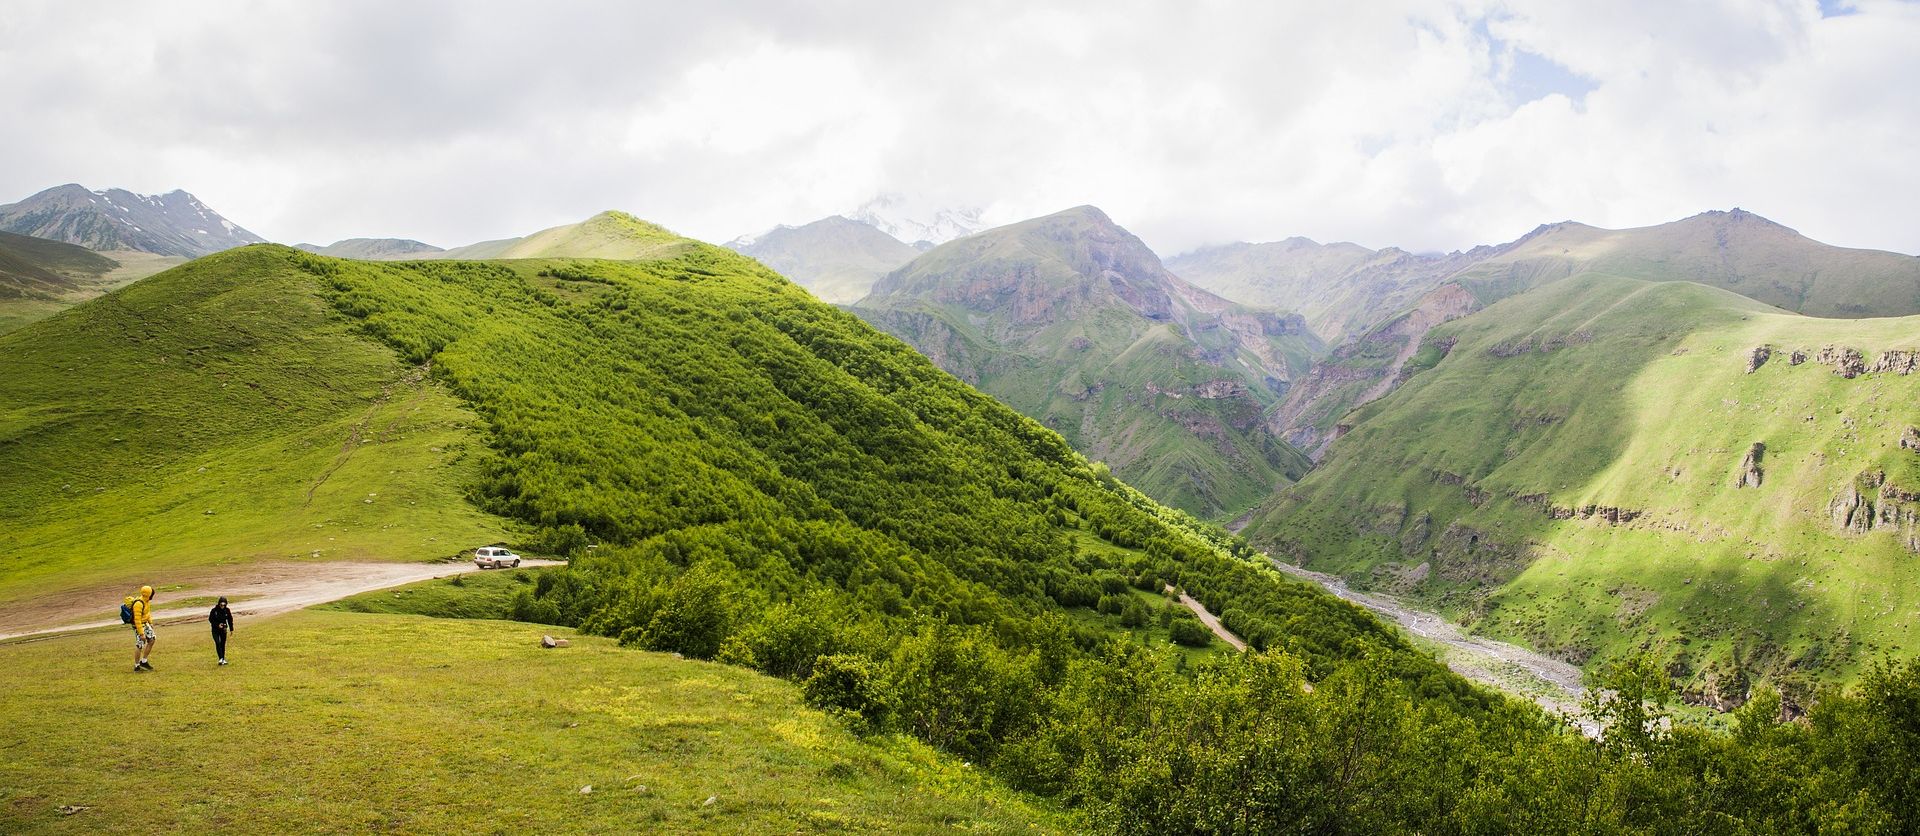 Mountain Range Georgia Kasbek Kaukasus